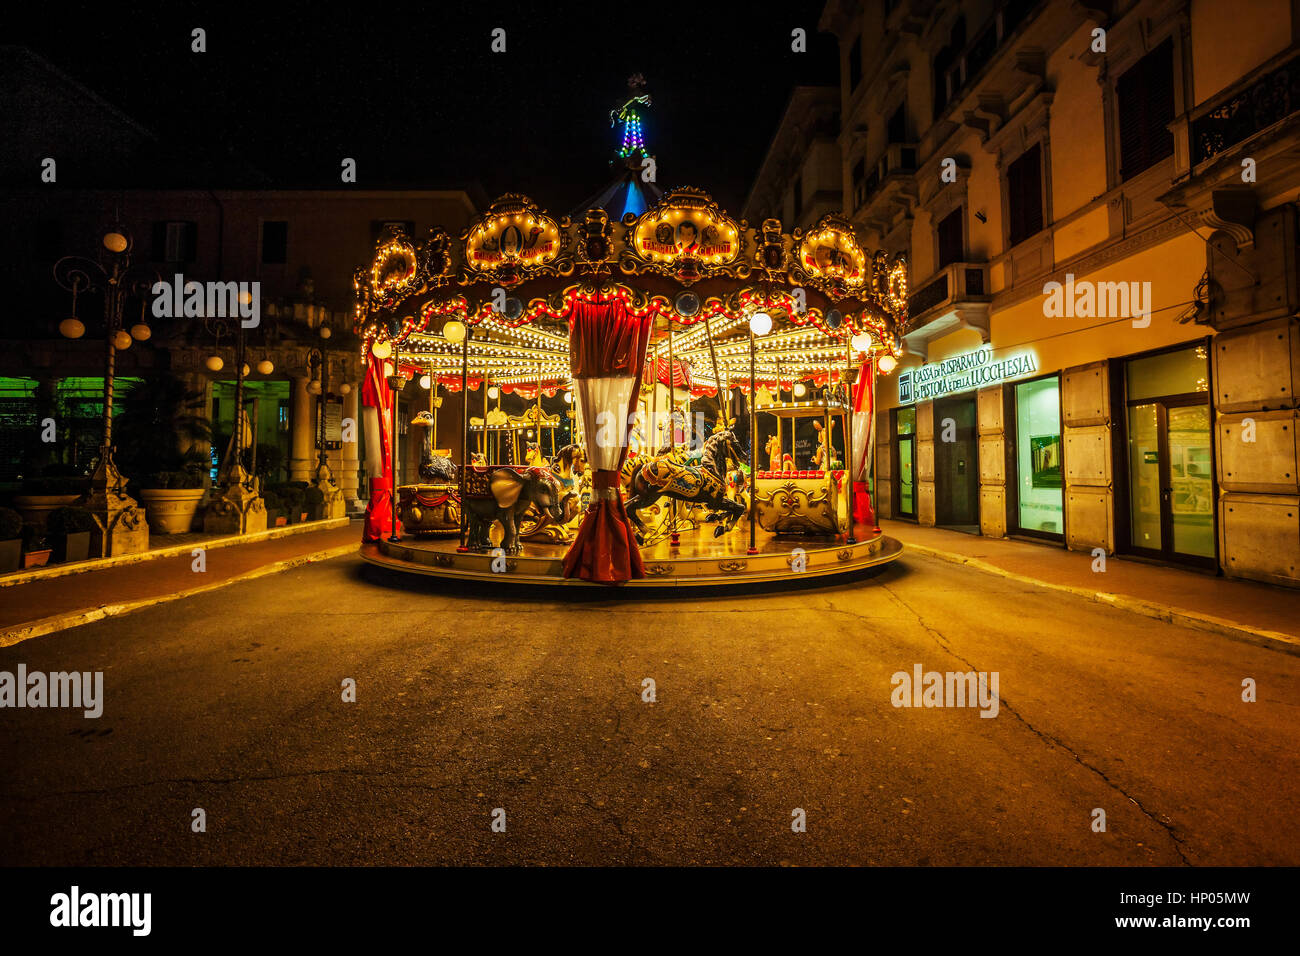 Carousel in the night, Montecatini terme, Tuscani, Italy Stock Photo